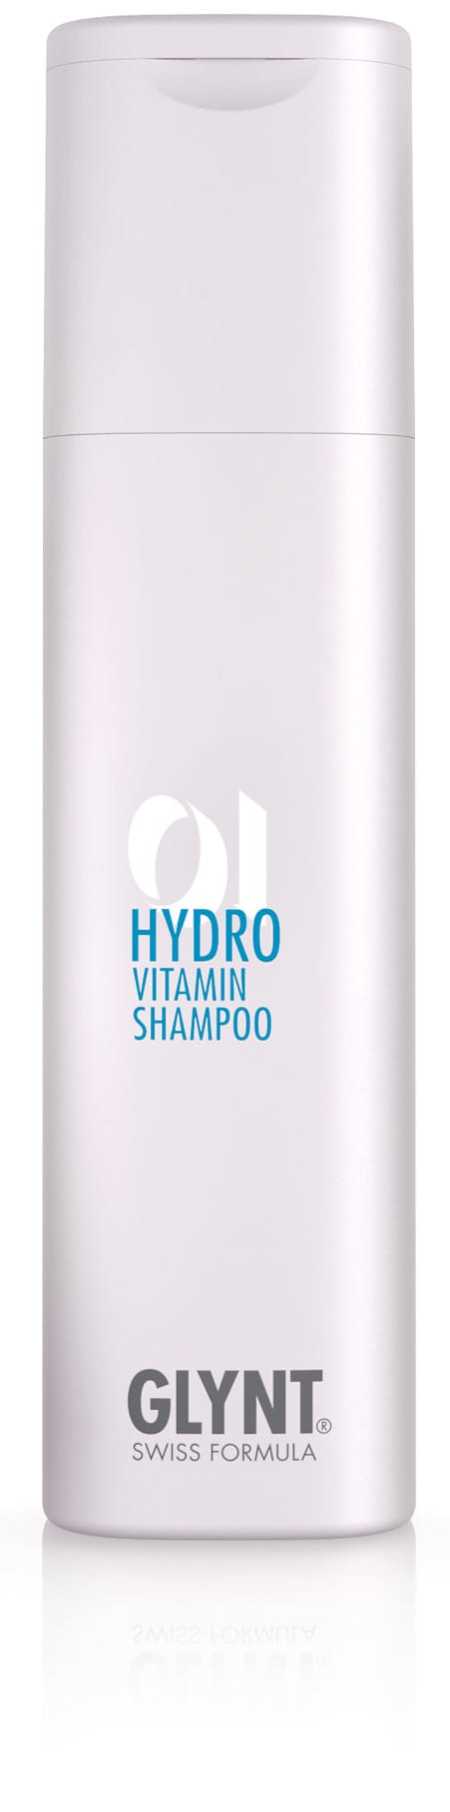 Glynt Hydro Vitamin Shampoo 250ml